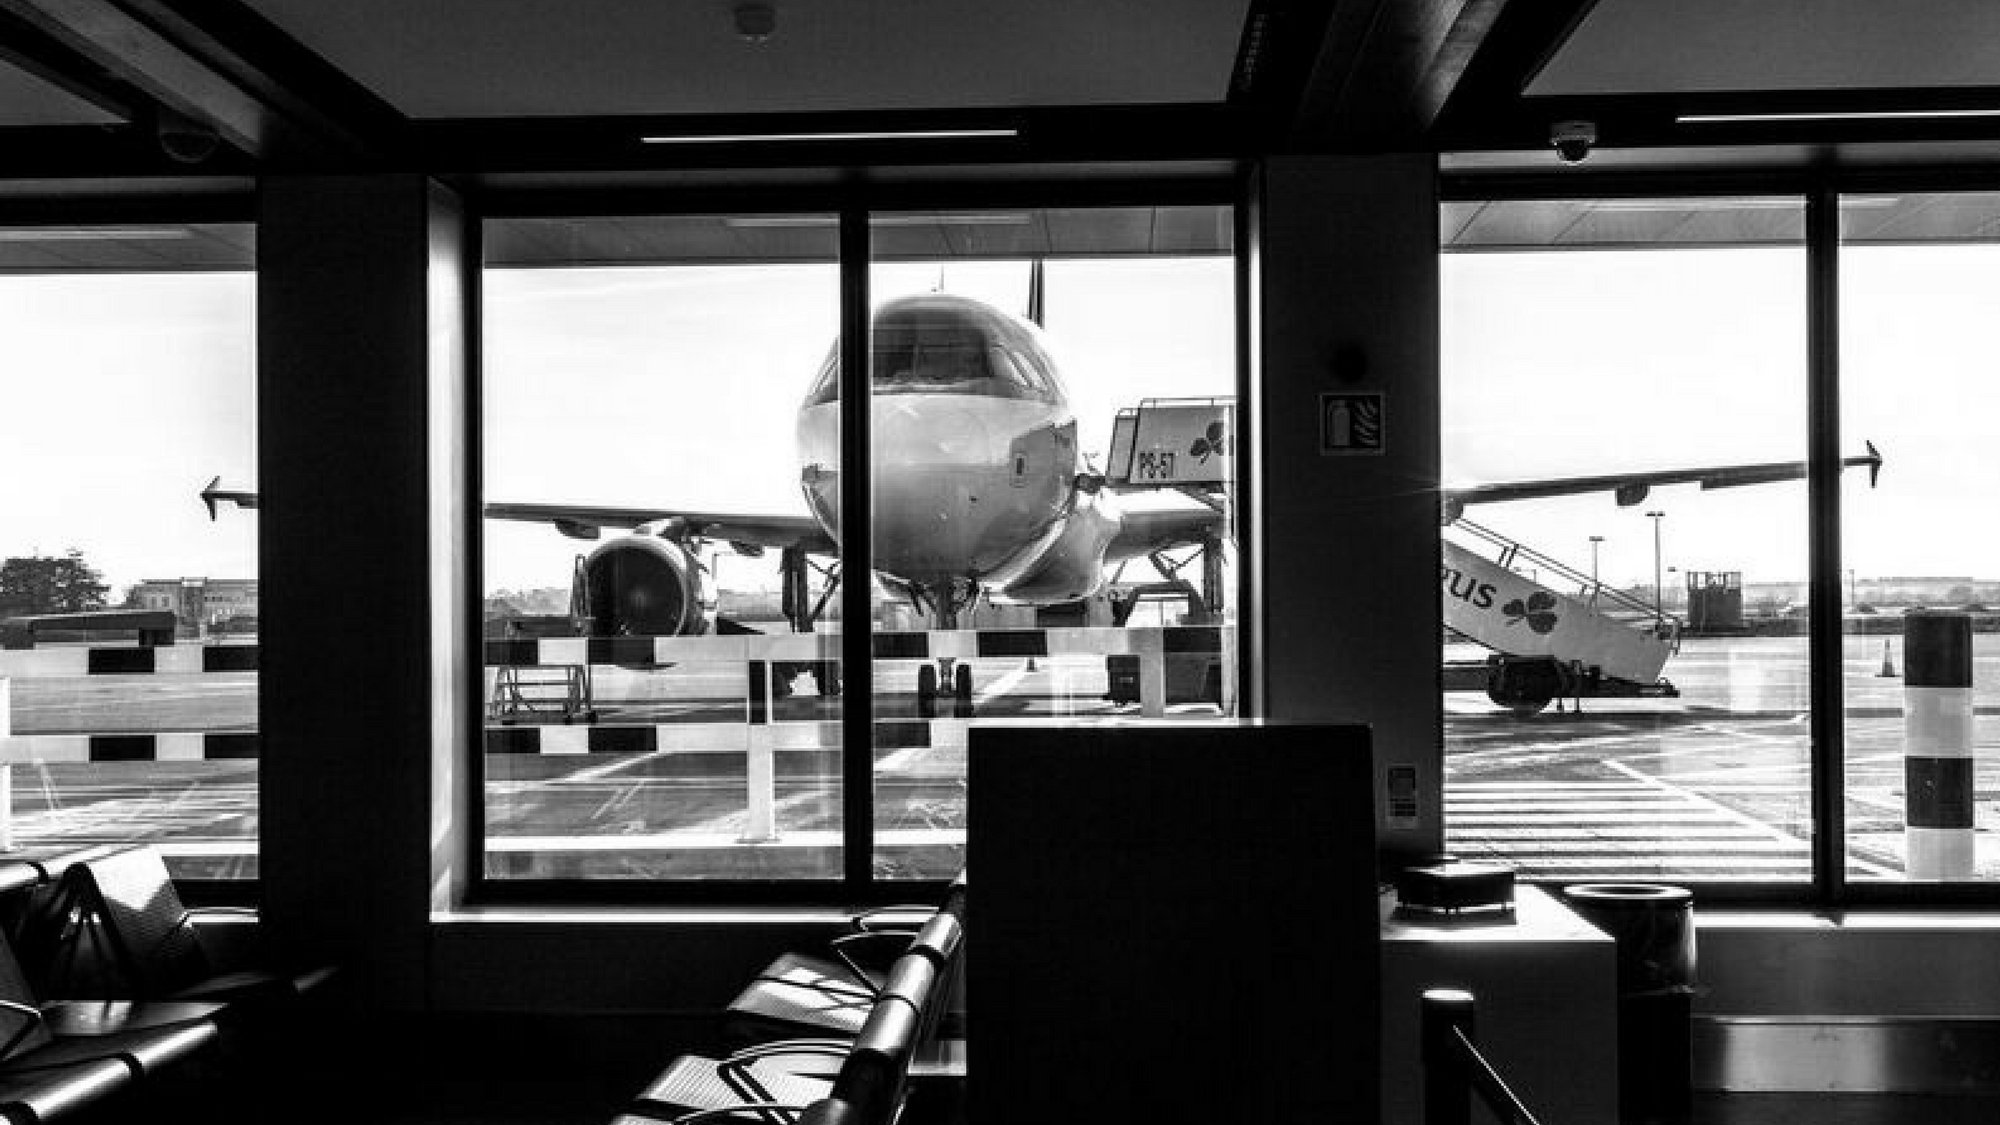 View of airplane through windows at South Gates, Dublin Airport